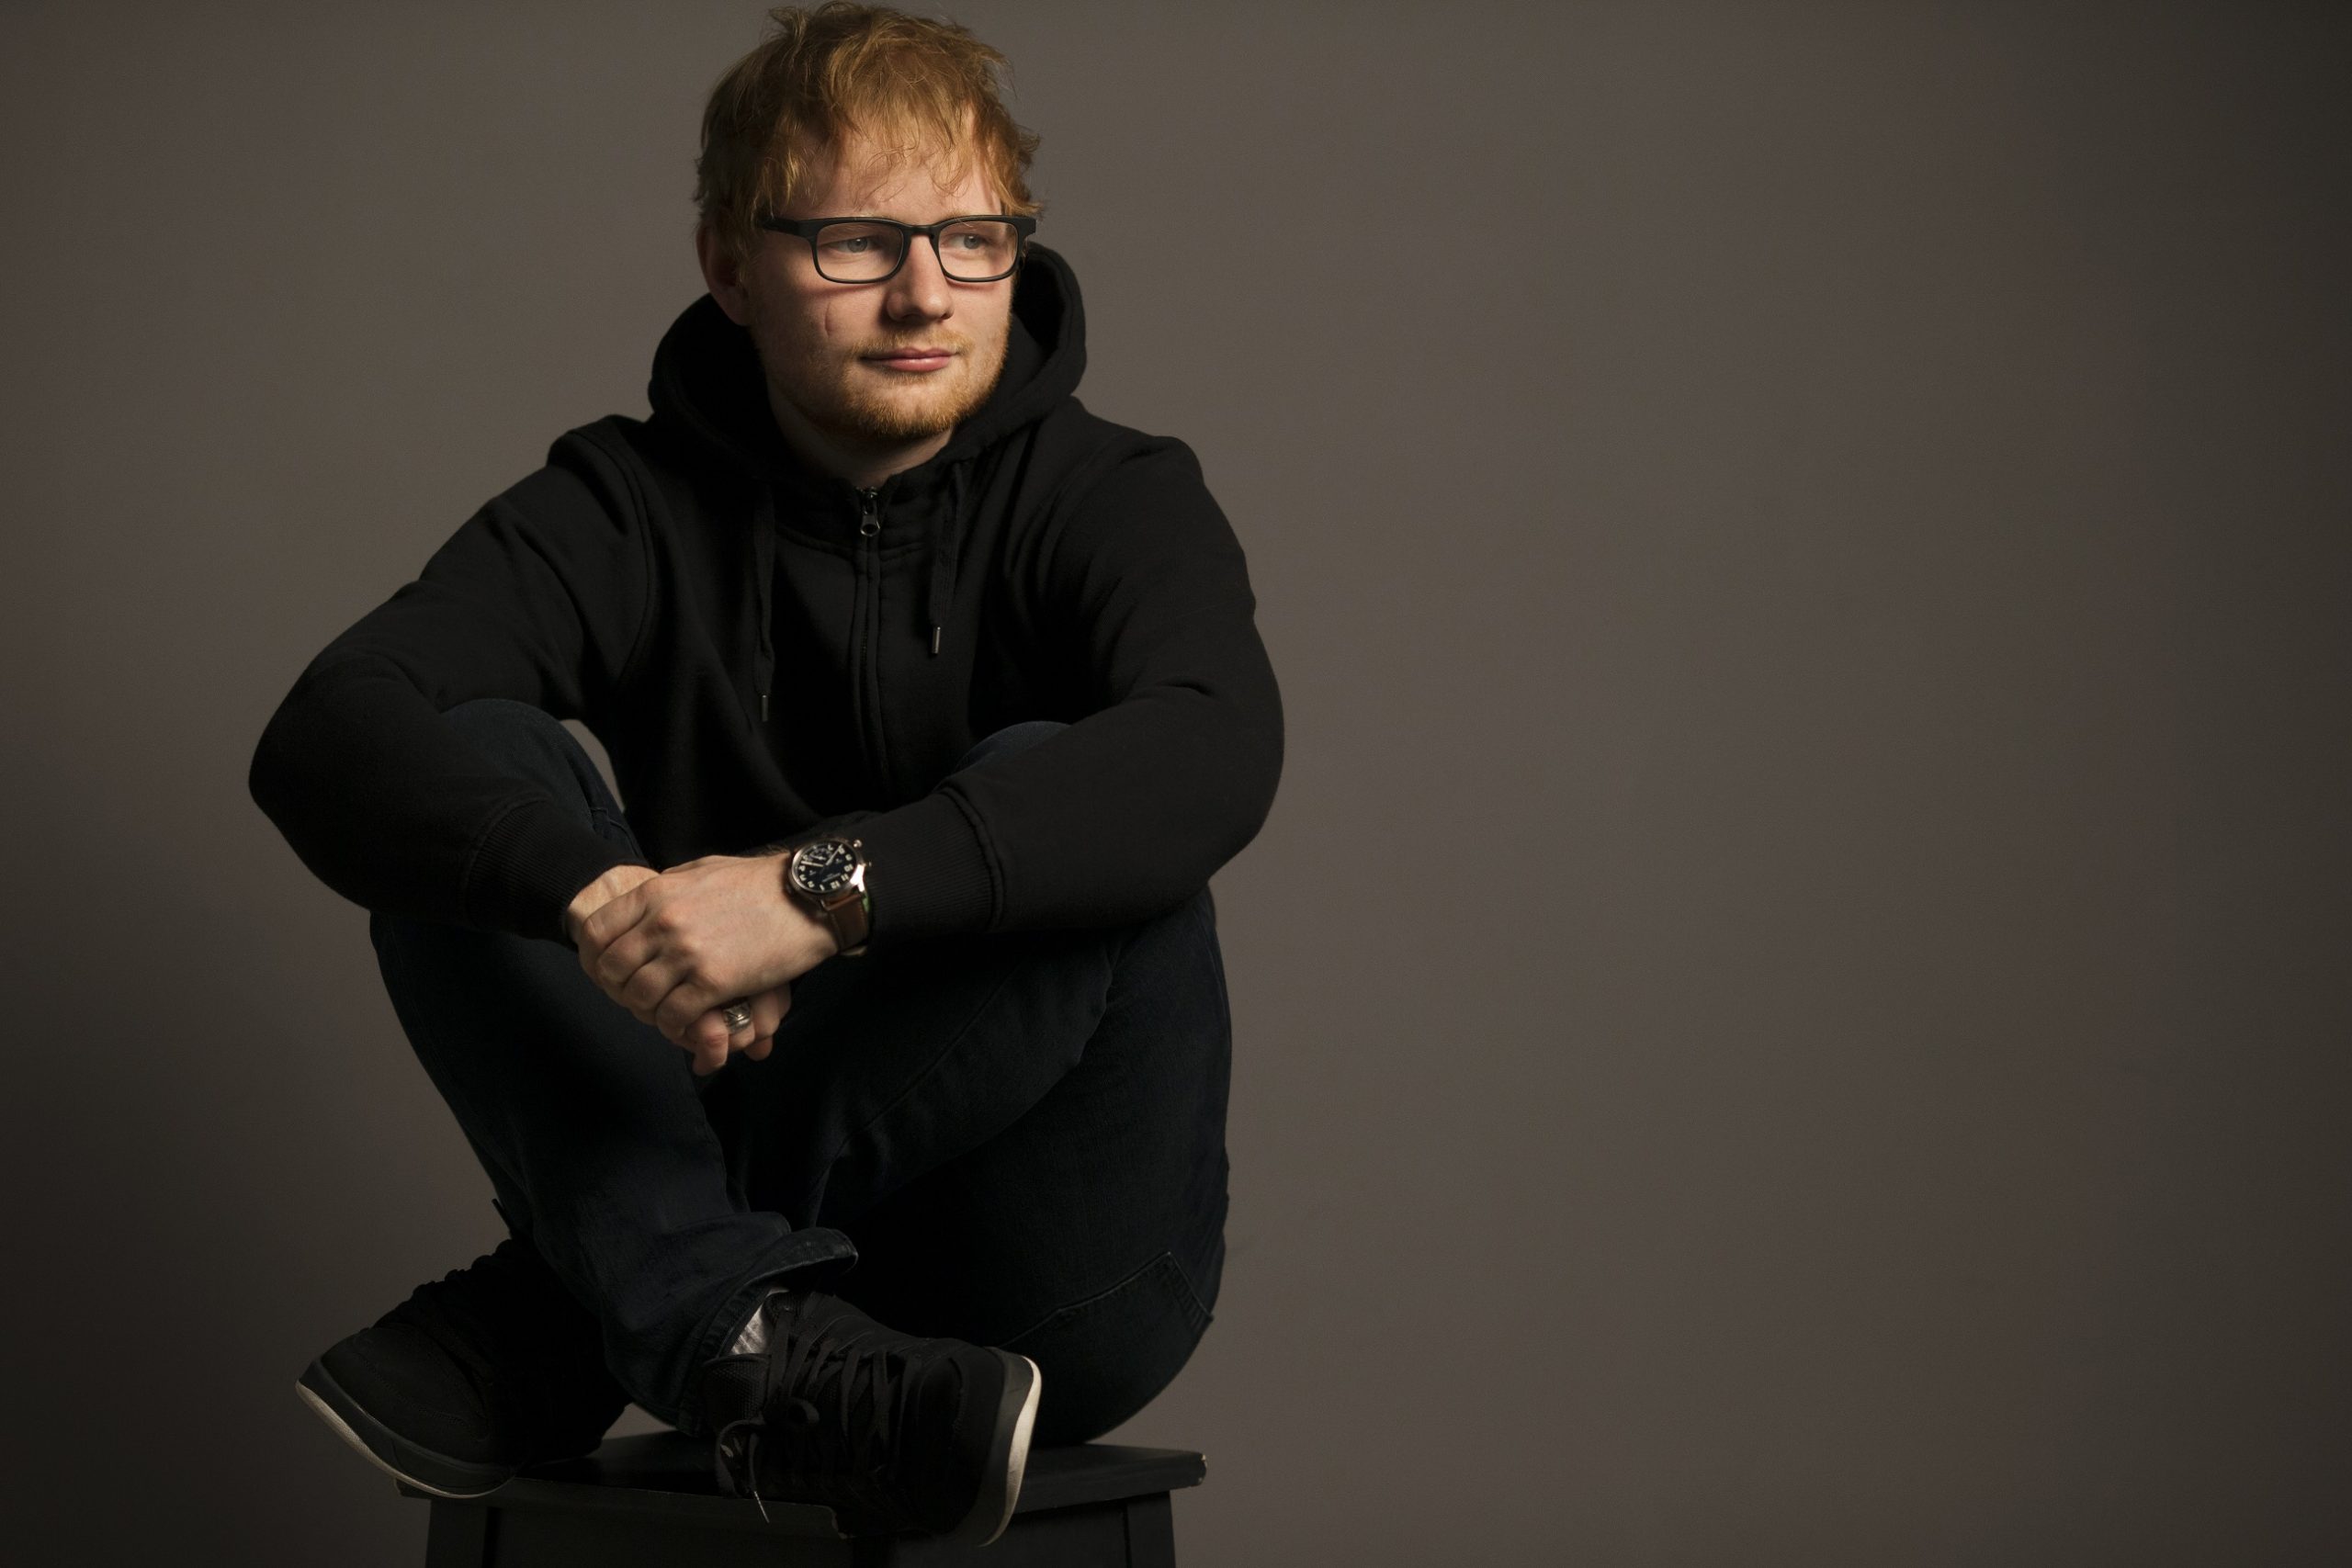 Trenutno pregledavate Ed Sheeran u ulozi britanskog špijuna u novom spotu “South of the Border”